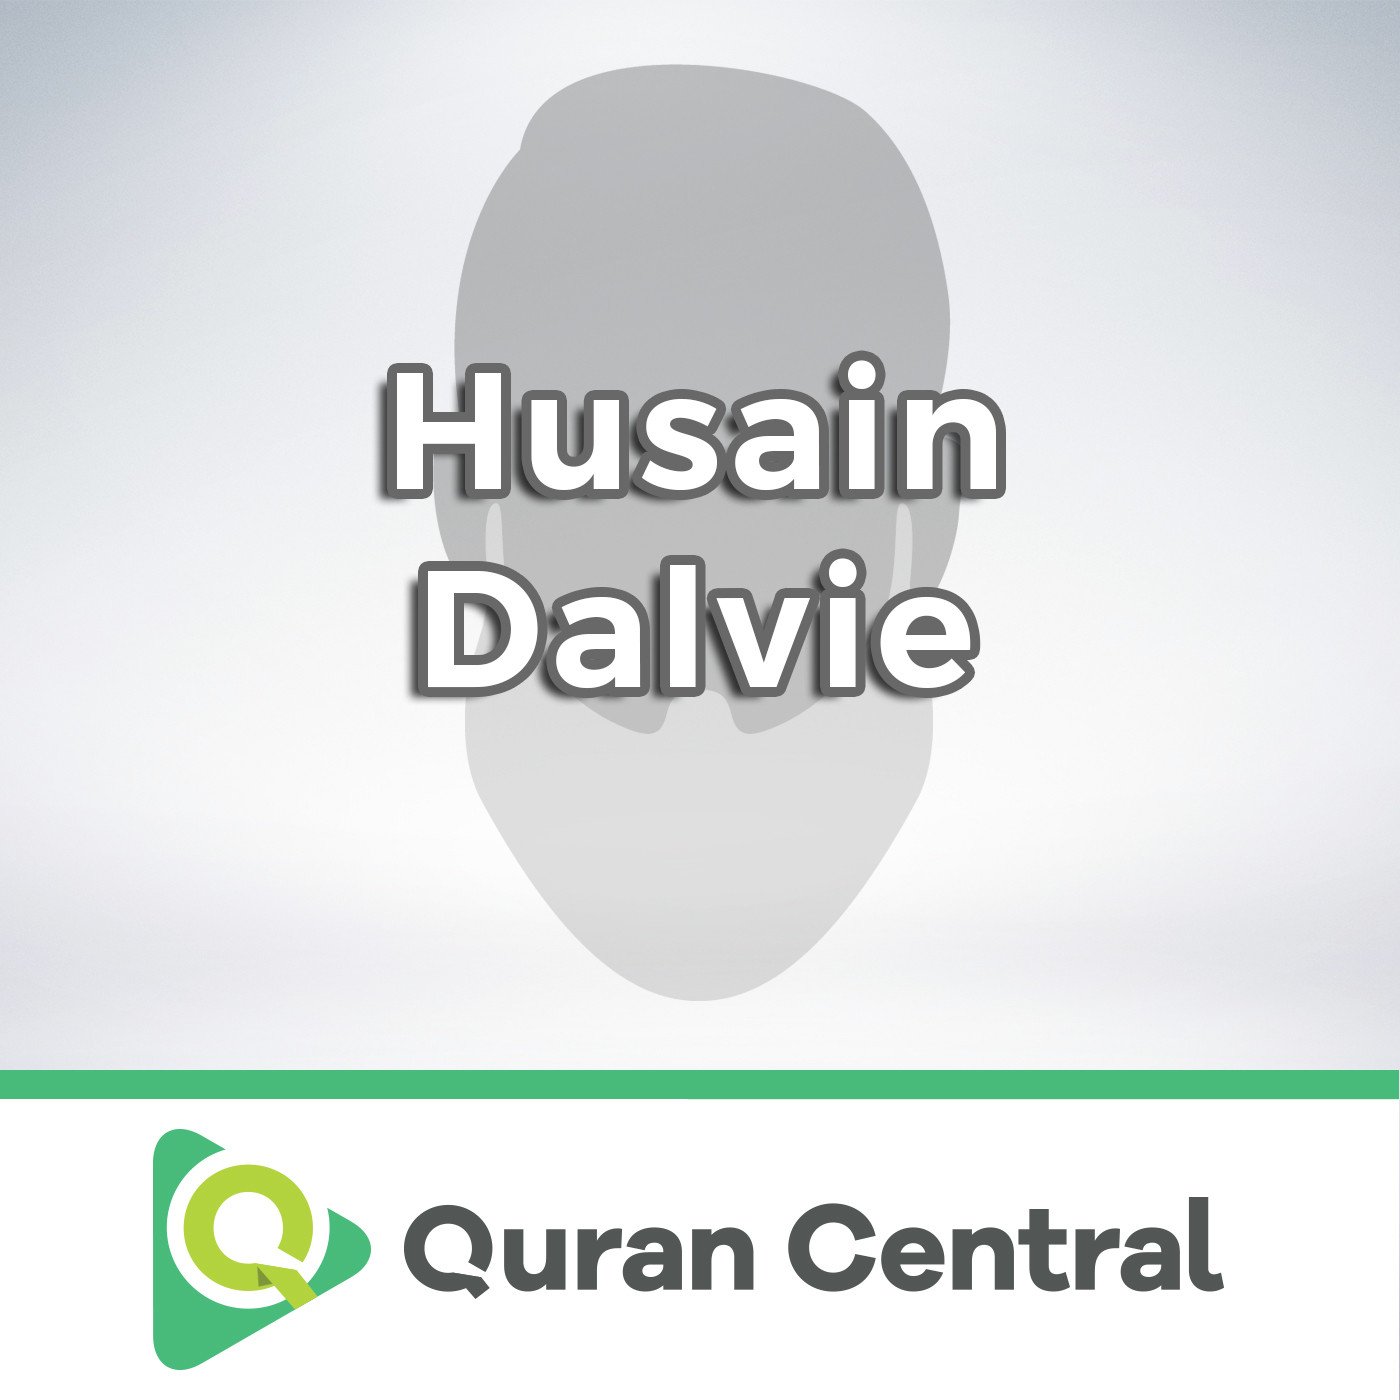 Husain Dalvie